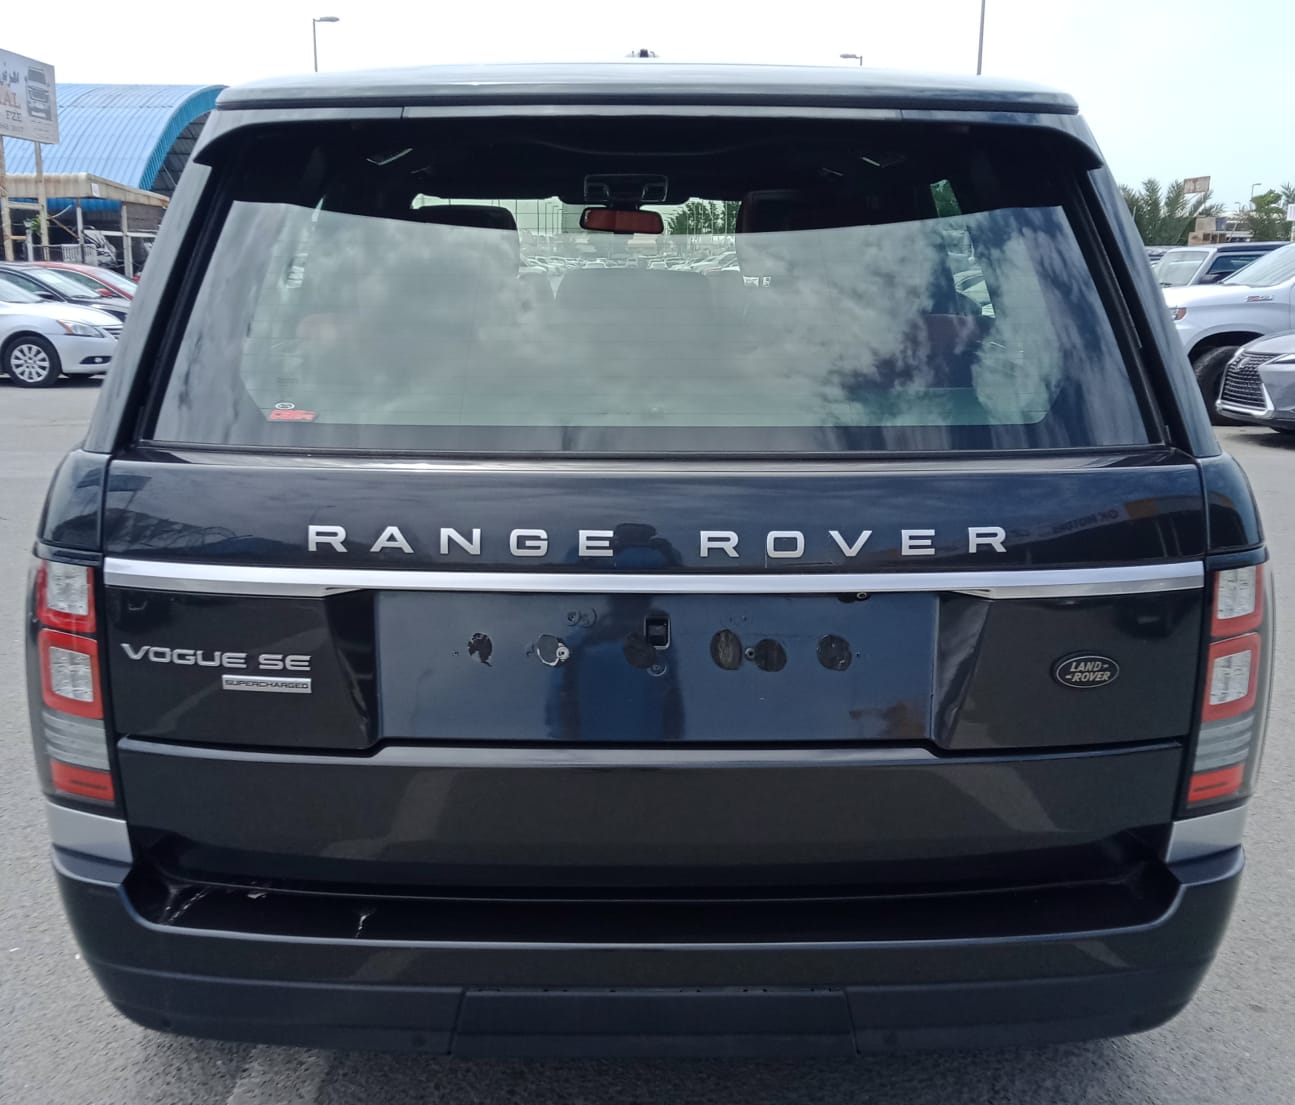 Range Rover Vogue SE Autobiography supercharged V8 5.0L Full Option Model 2013-pic_4